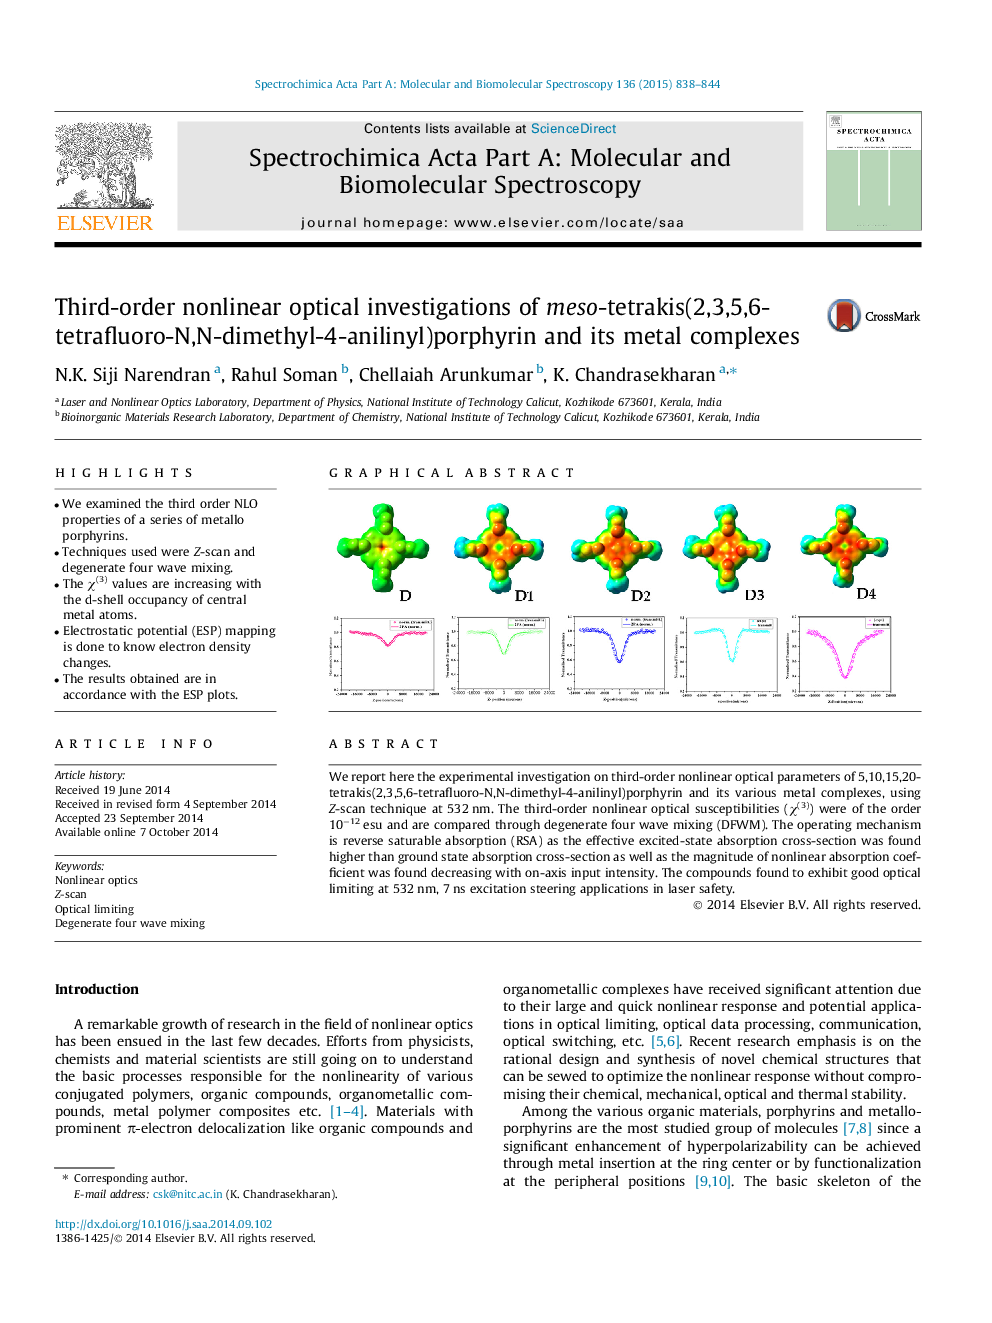 Third-order nonlinear optical investigations of meso-tetrakis(2,3,5,6-tetrafluoro-N,N-dimethyl-4-anilinyl)porphyrin and its metal complexes